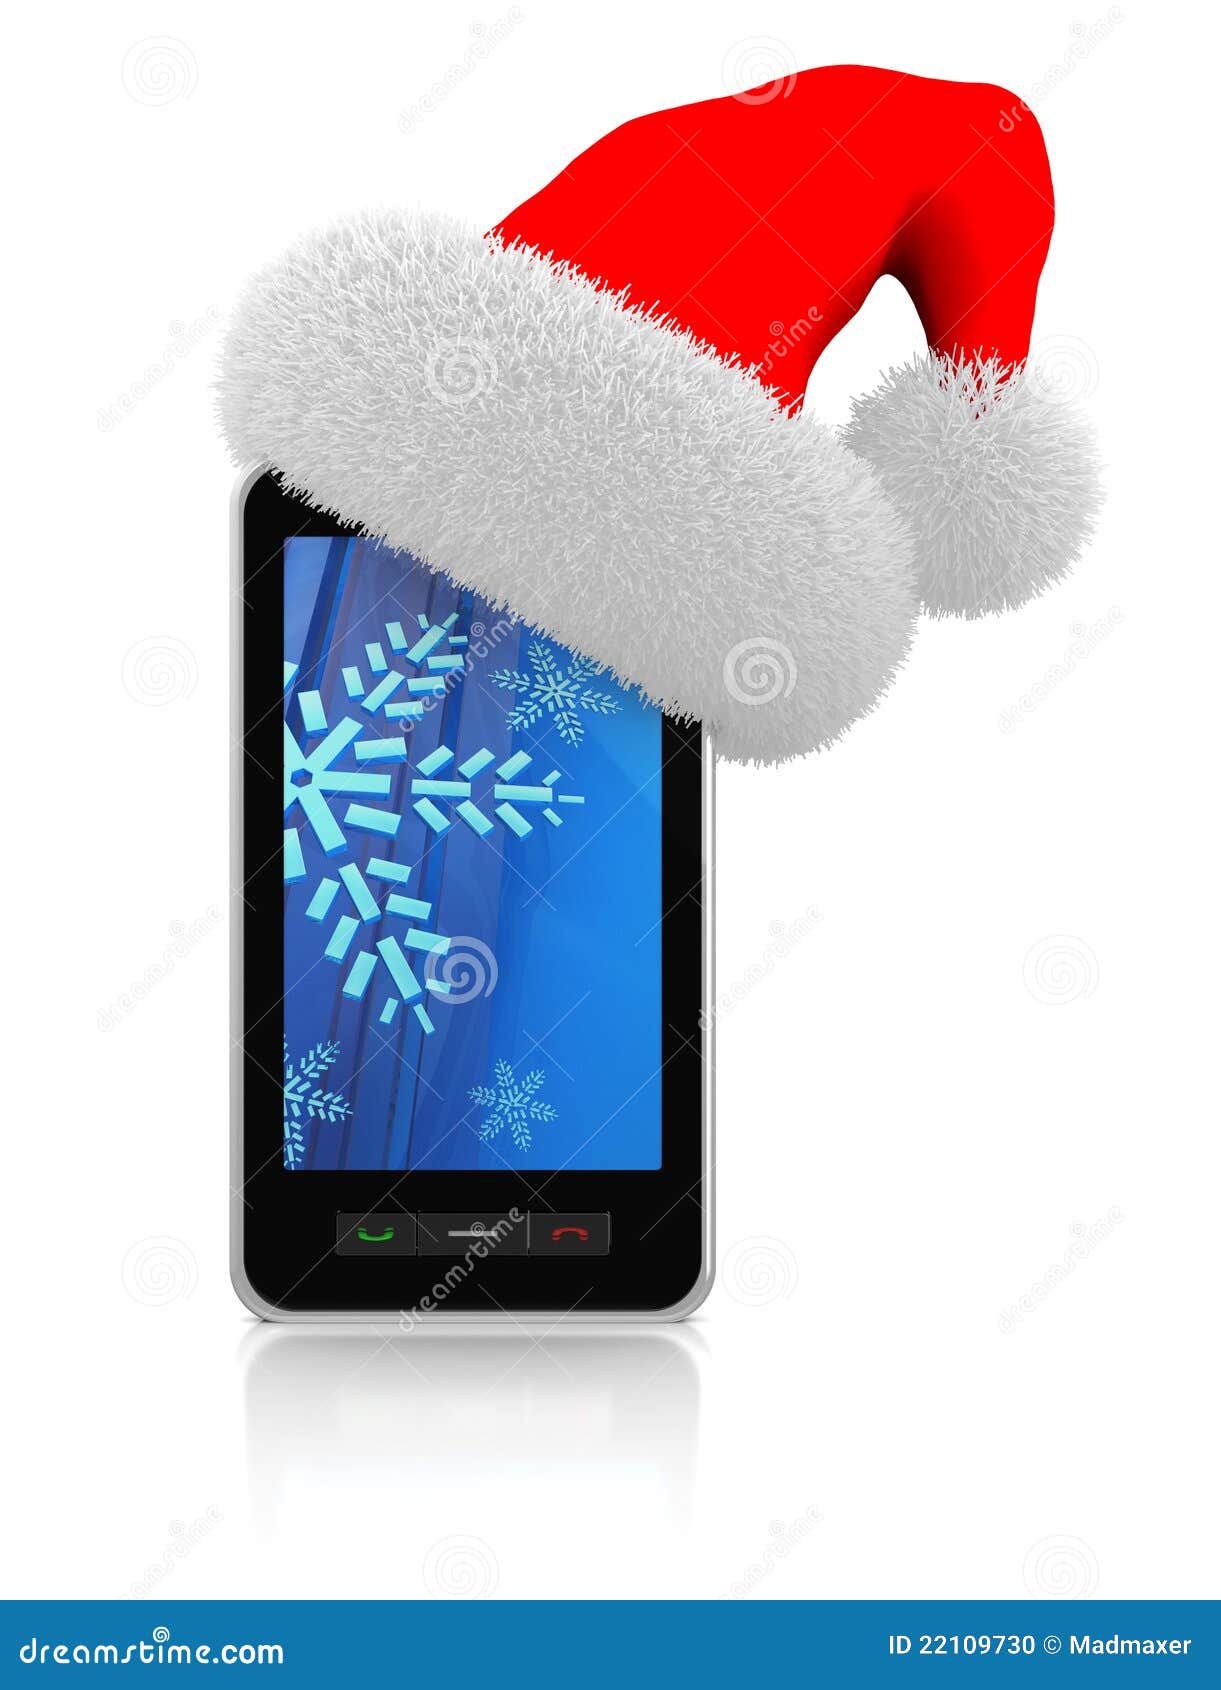 1a11a2christmas-gift-phone-22109730